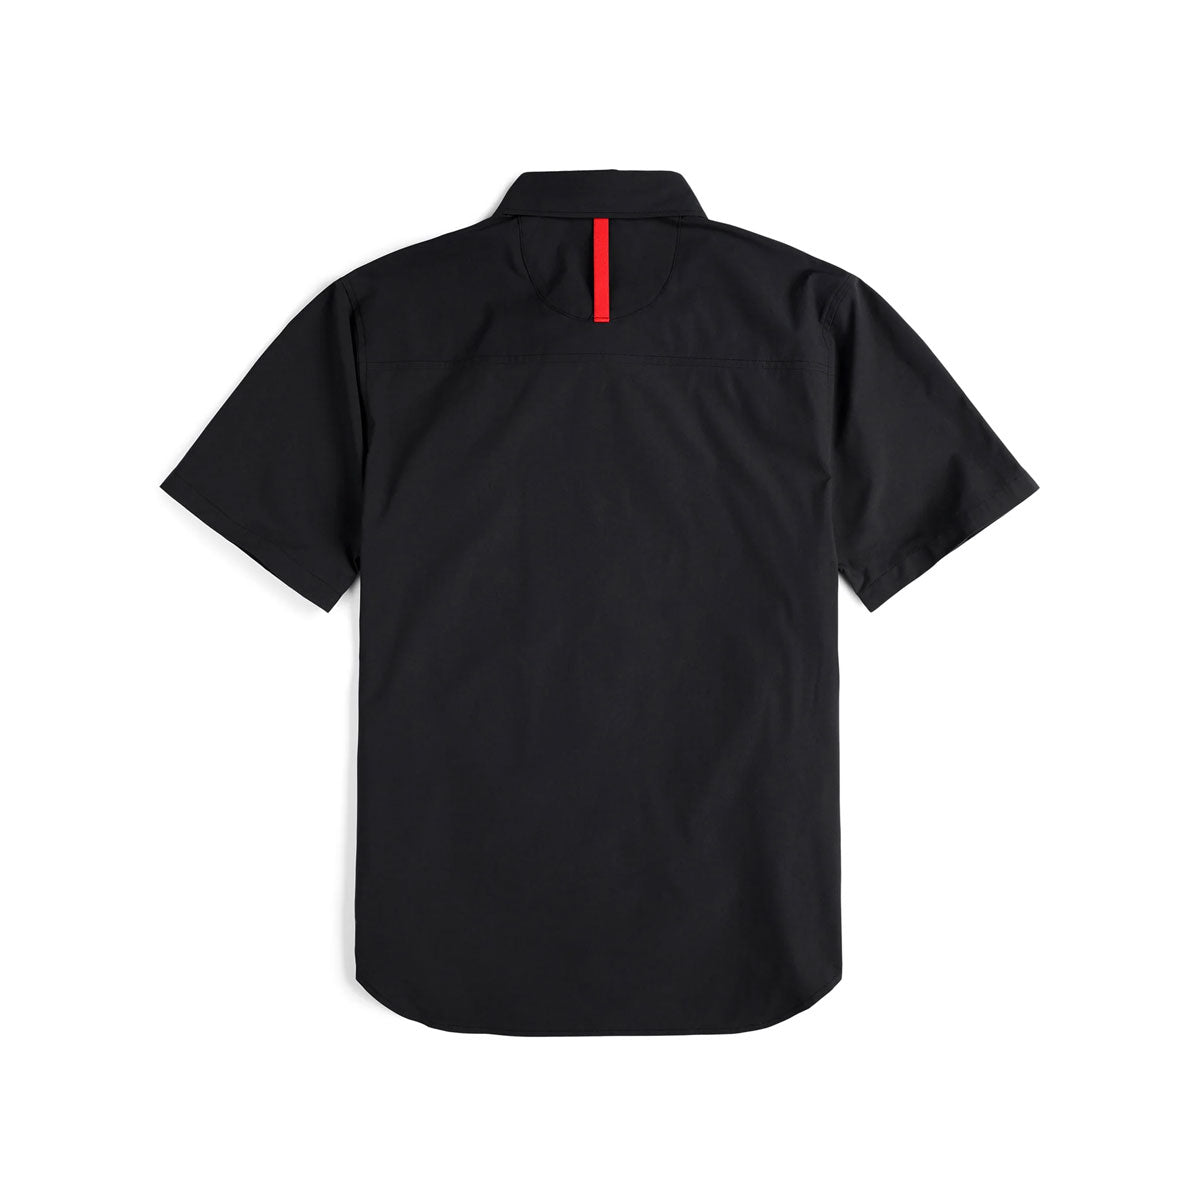 Topo Designs : Global Shirt - Short Sleeve : Black